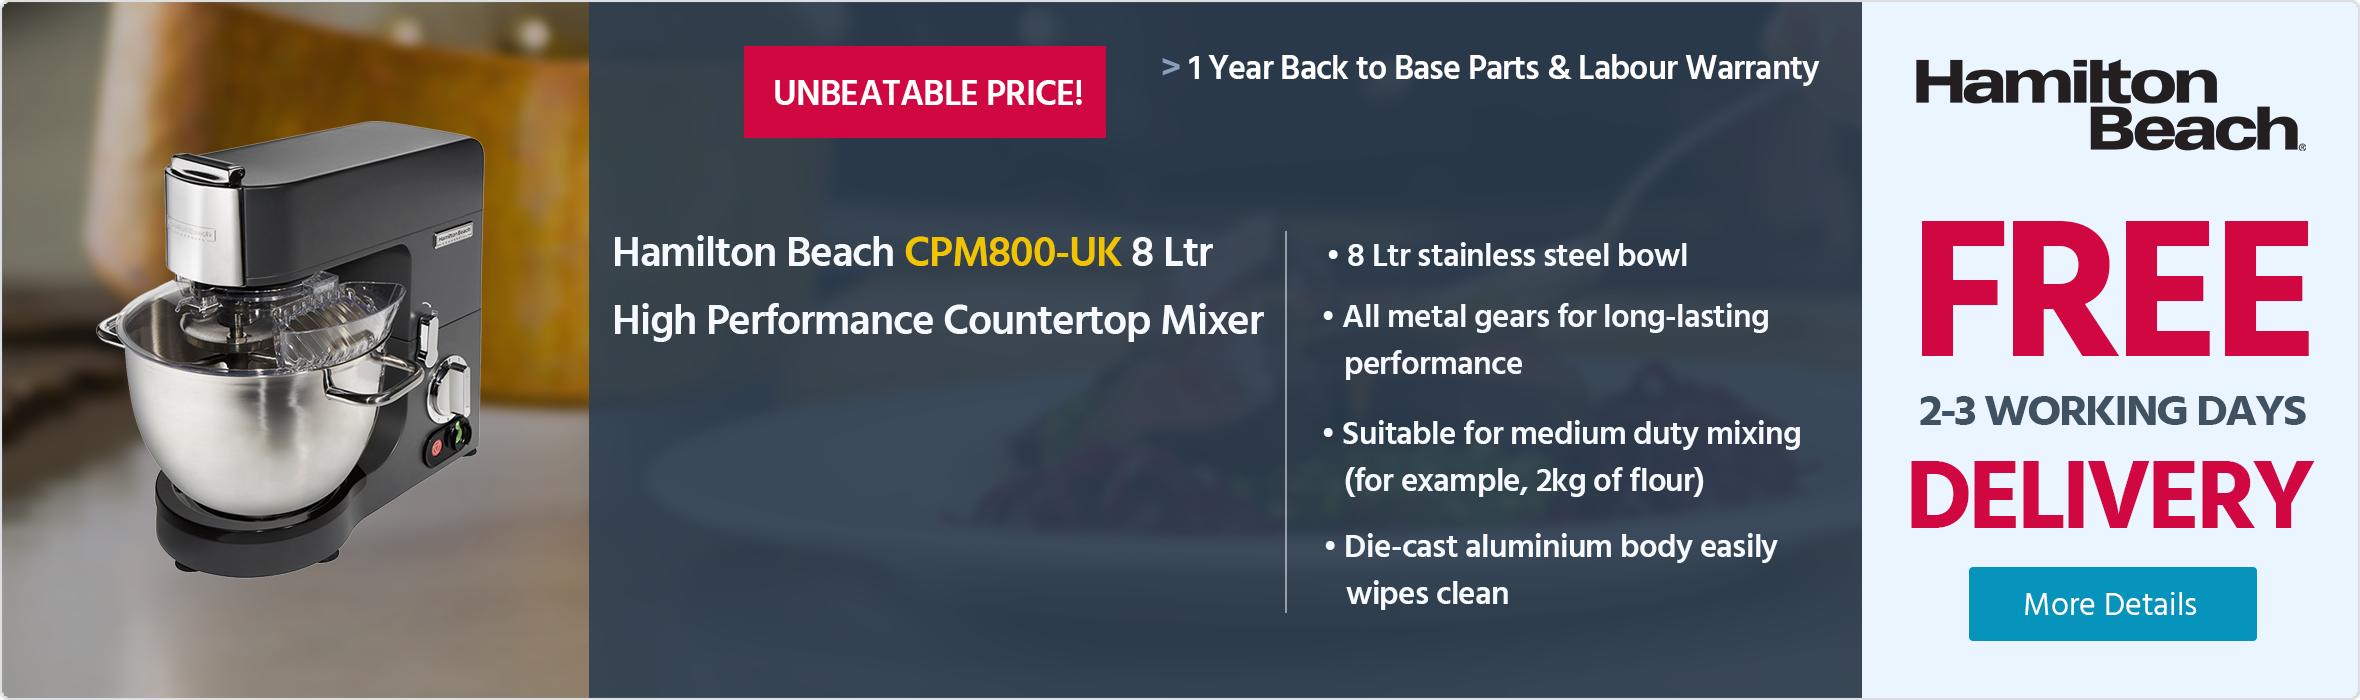 Hamilton Beach CPM800-UK 8 Ltr High Performance Countertop Mixer